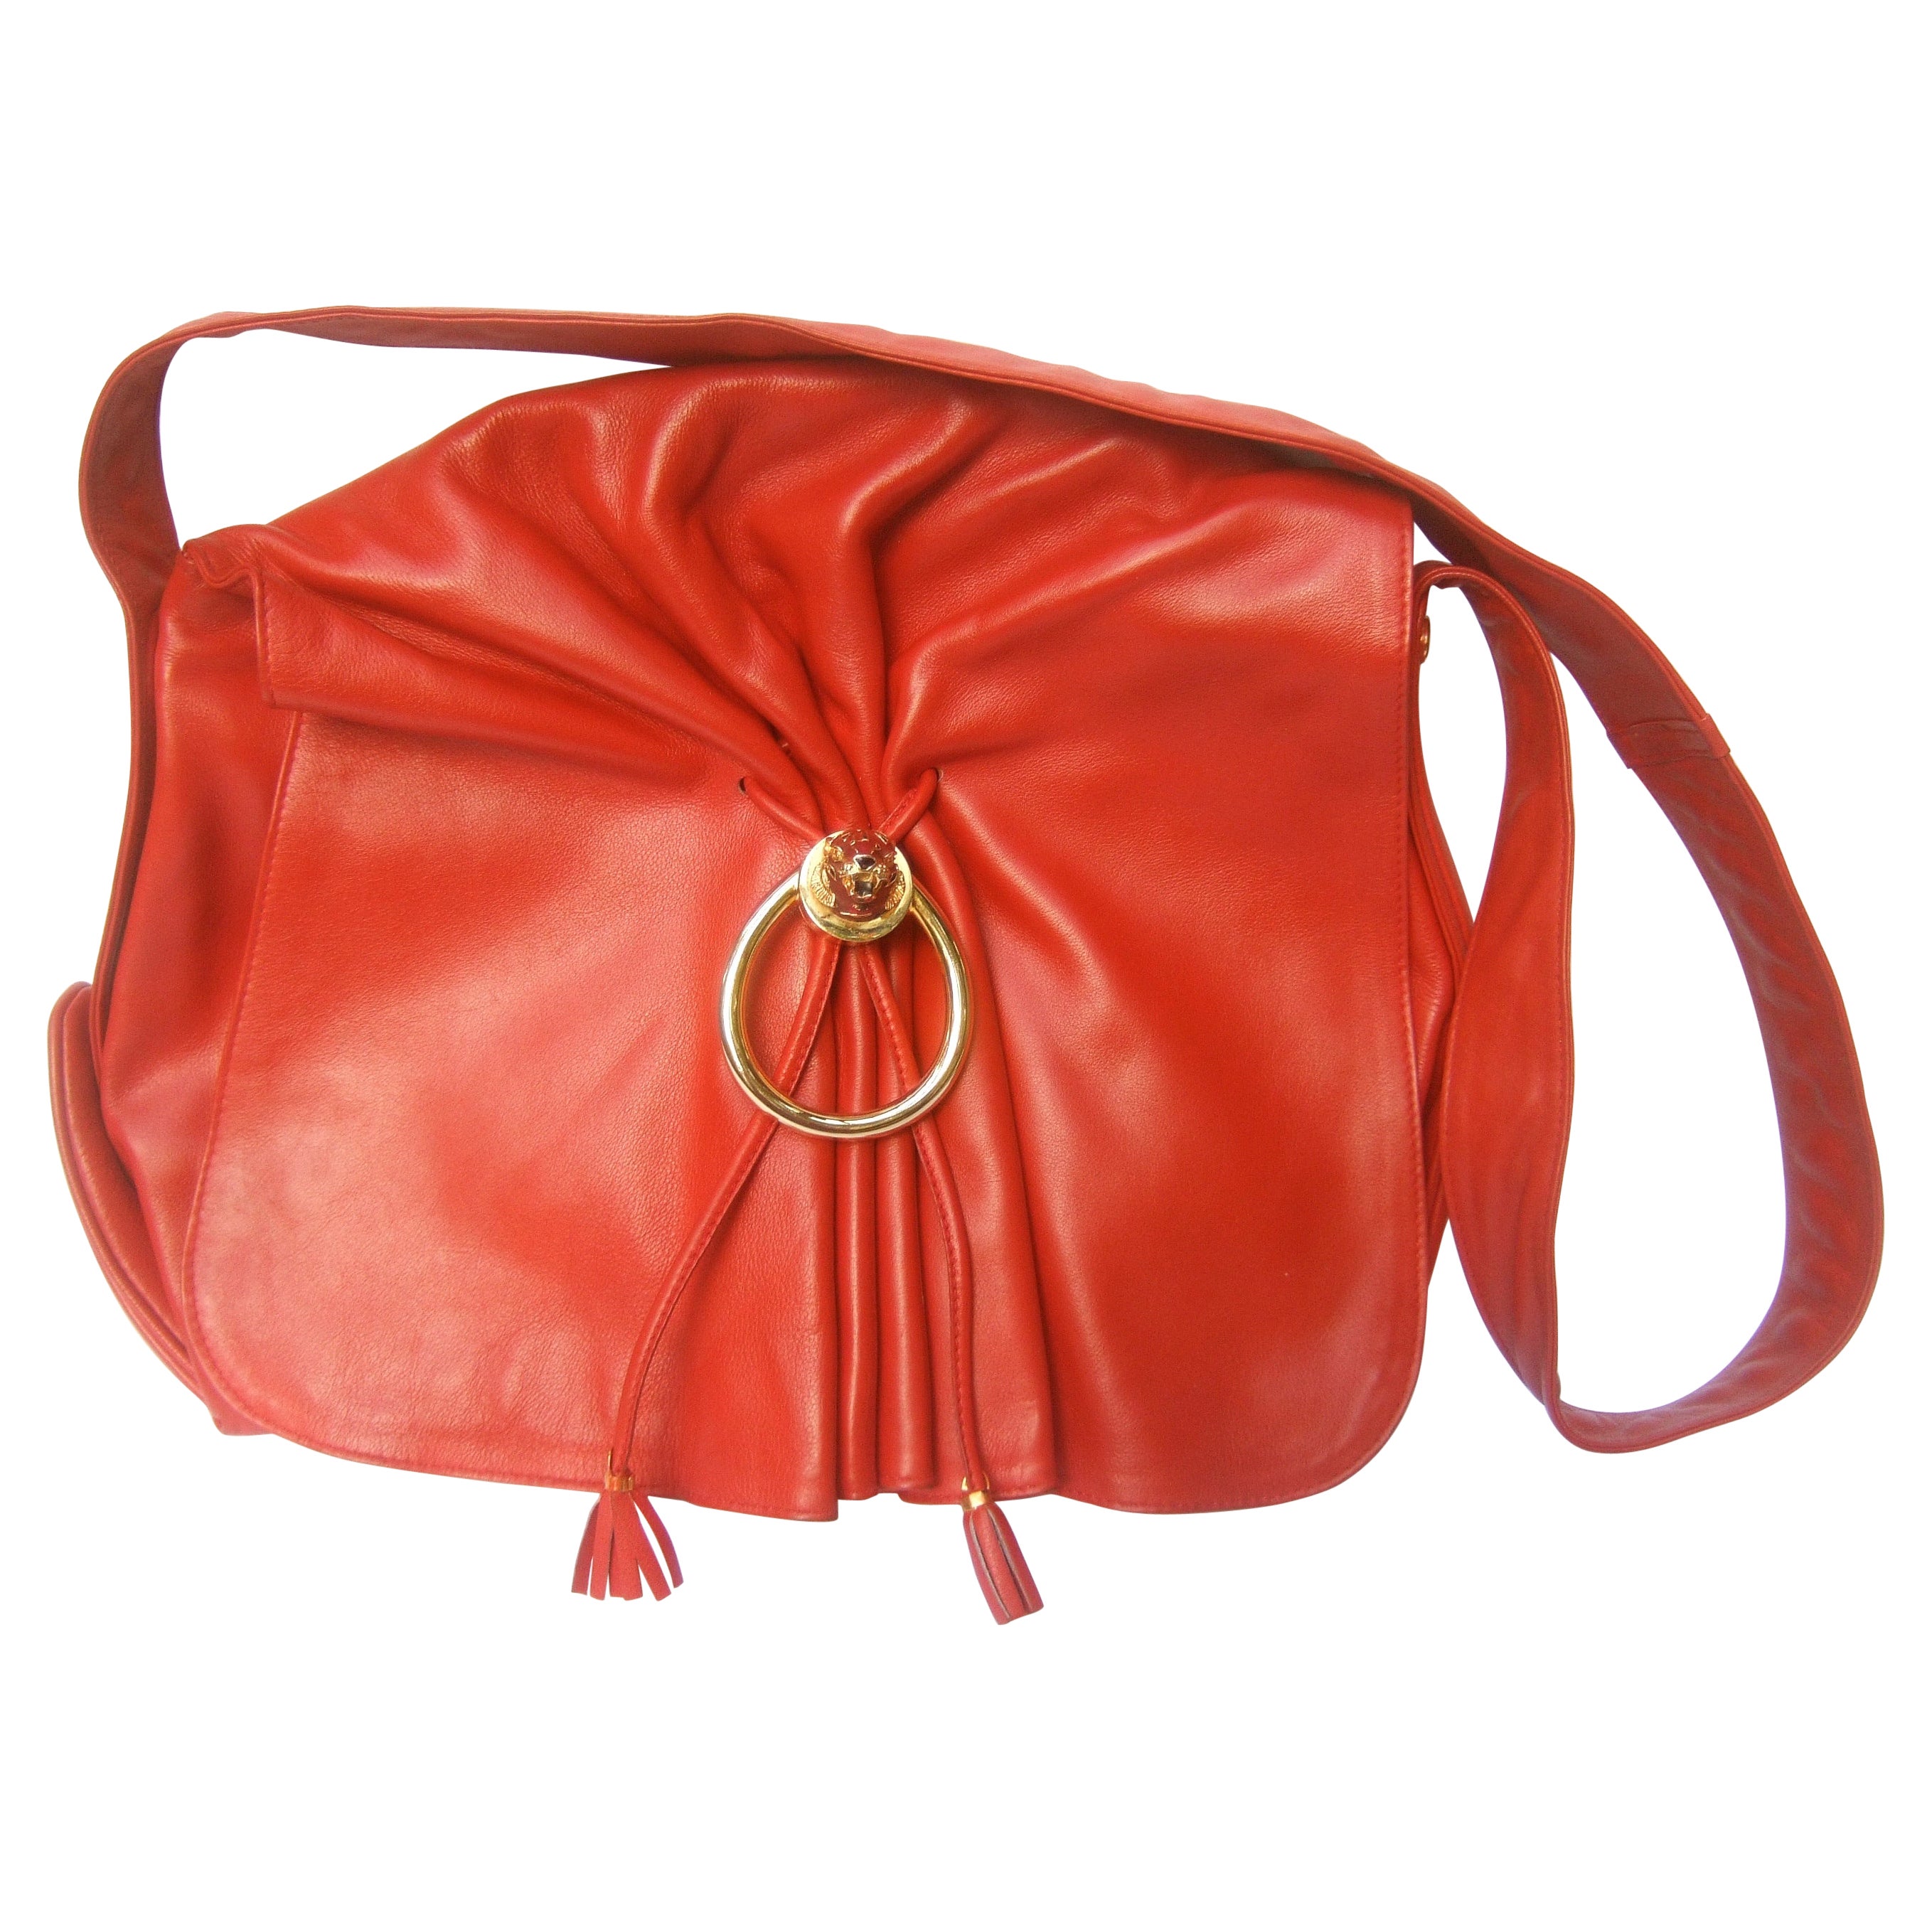 Gucci Italy Rare Red Leather Tiger Emblem Shoulder Bag c 1980s 